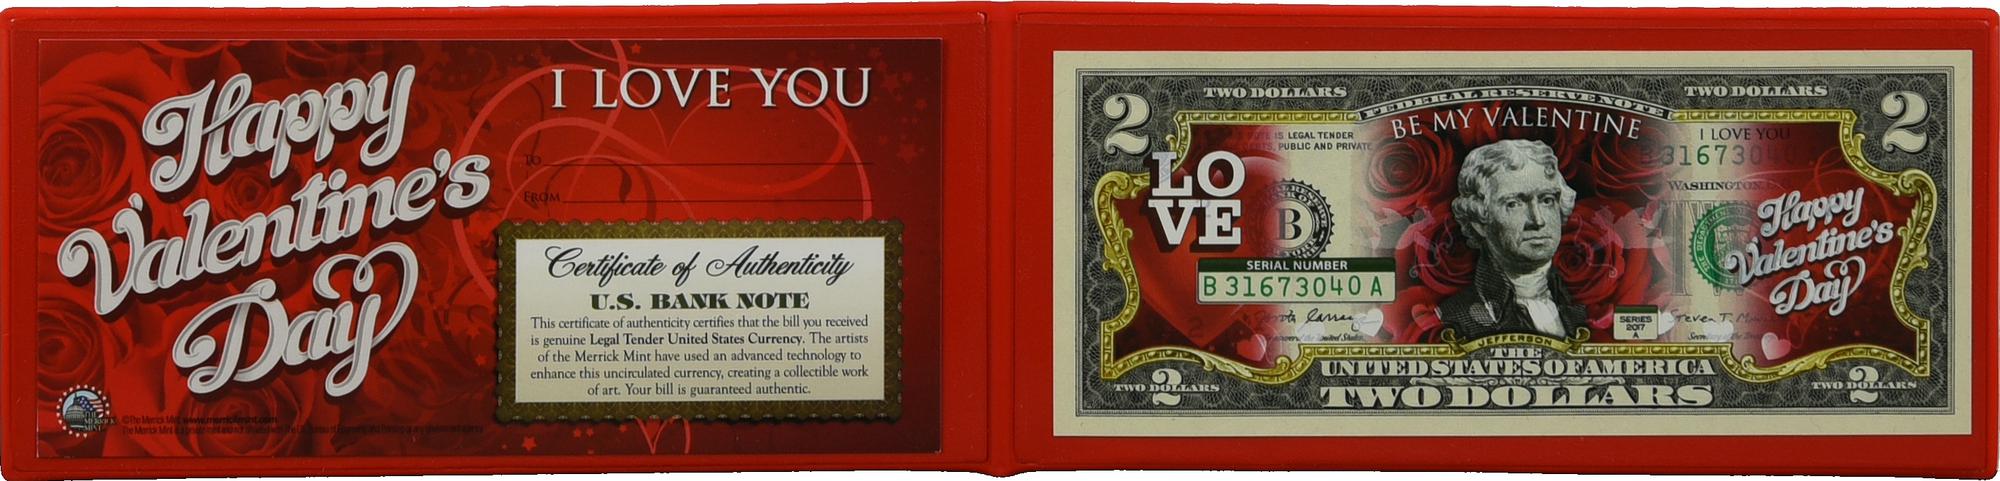 Merrick Mint VALENTINE'S DAY (RED) stampa su banconota, cm 6,5x15,5 L'opera...